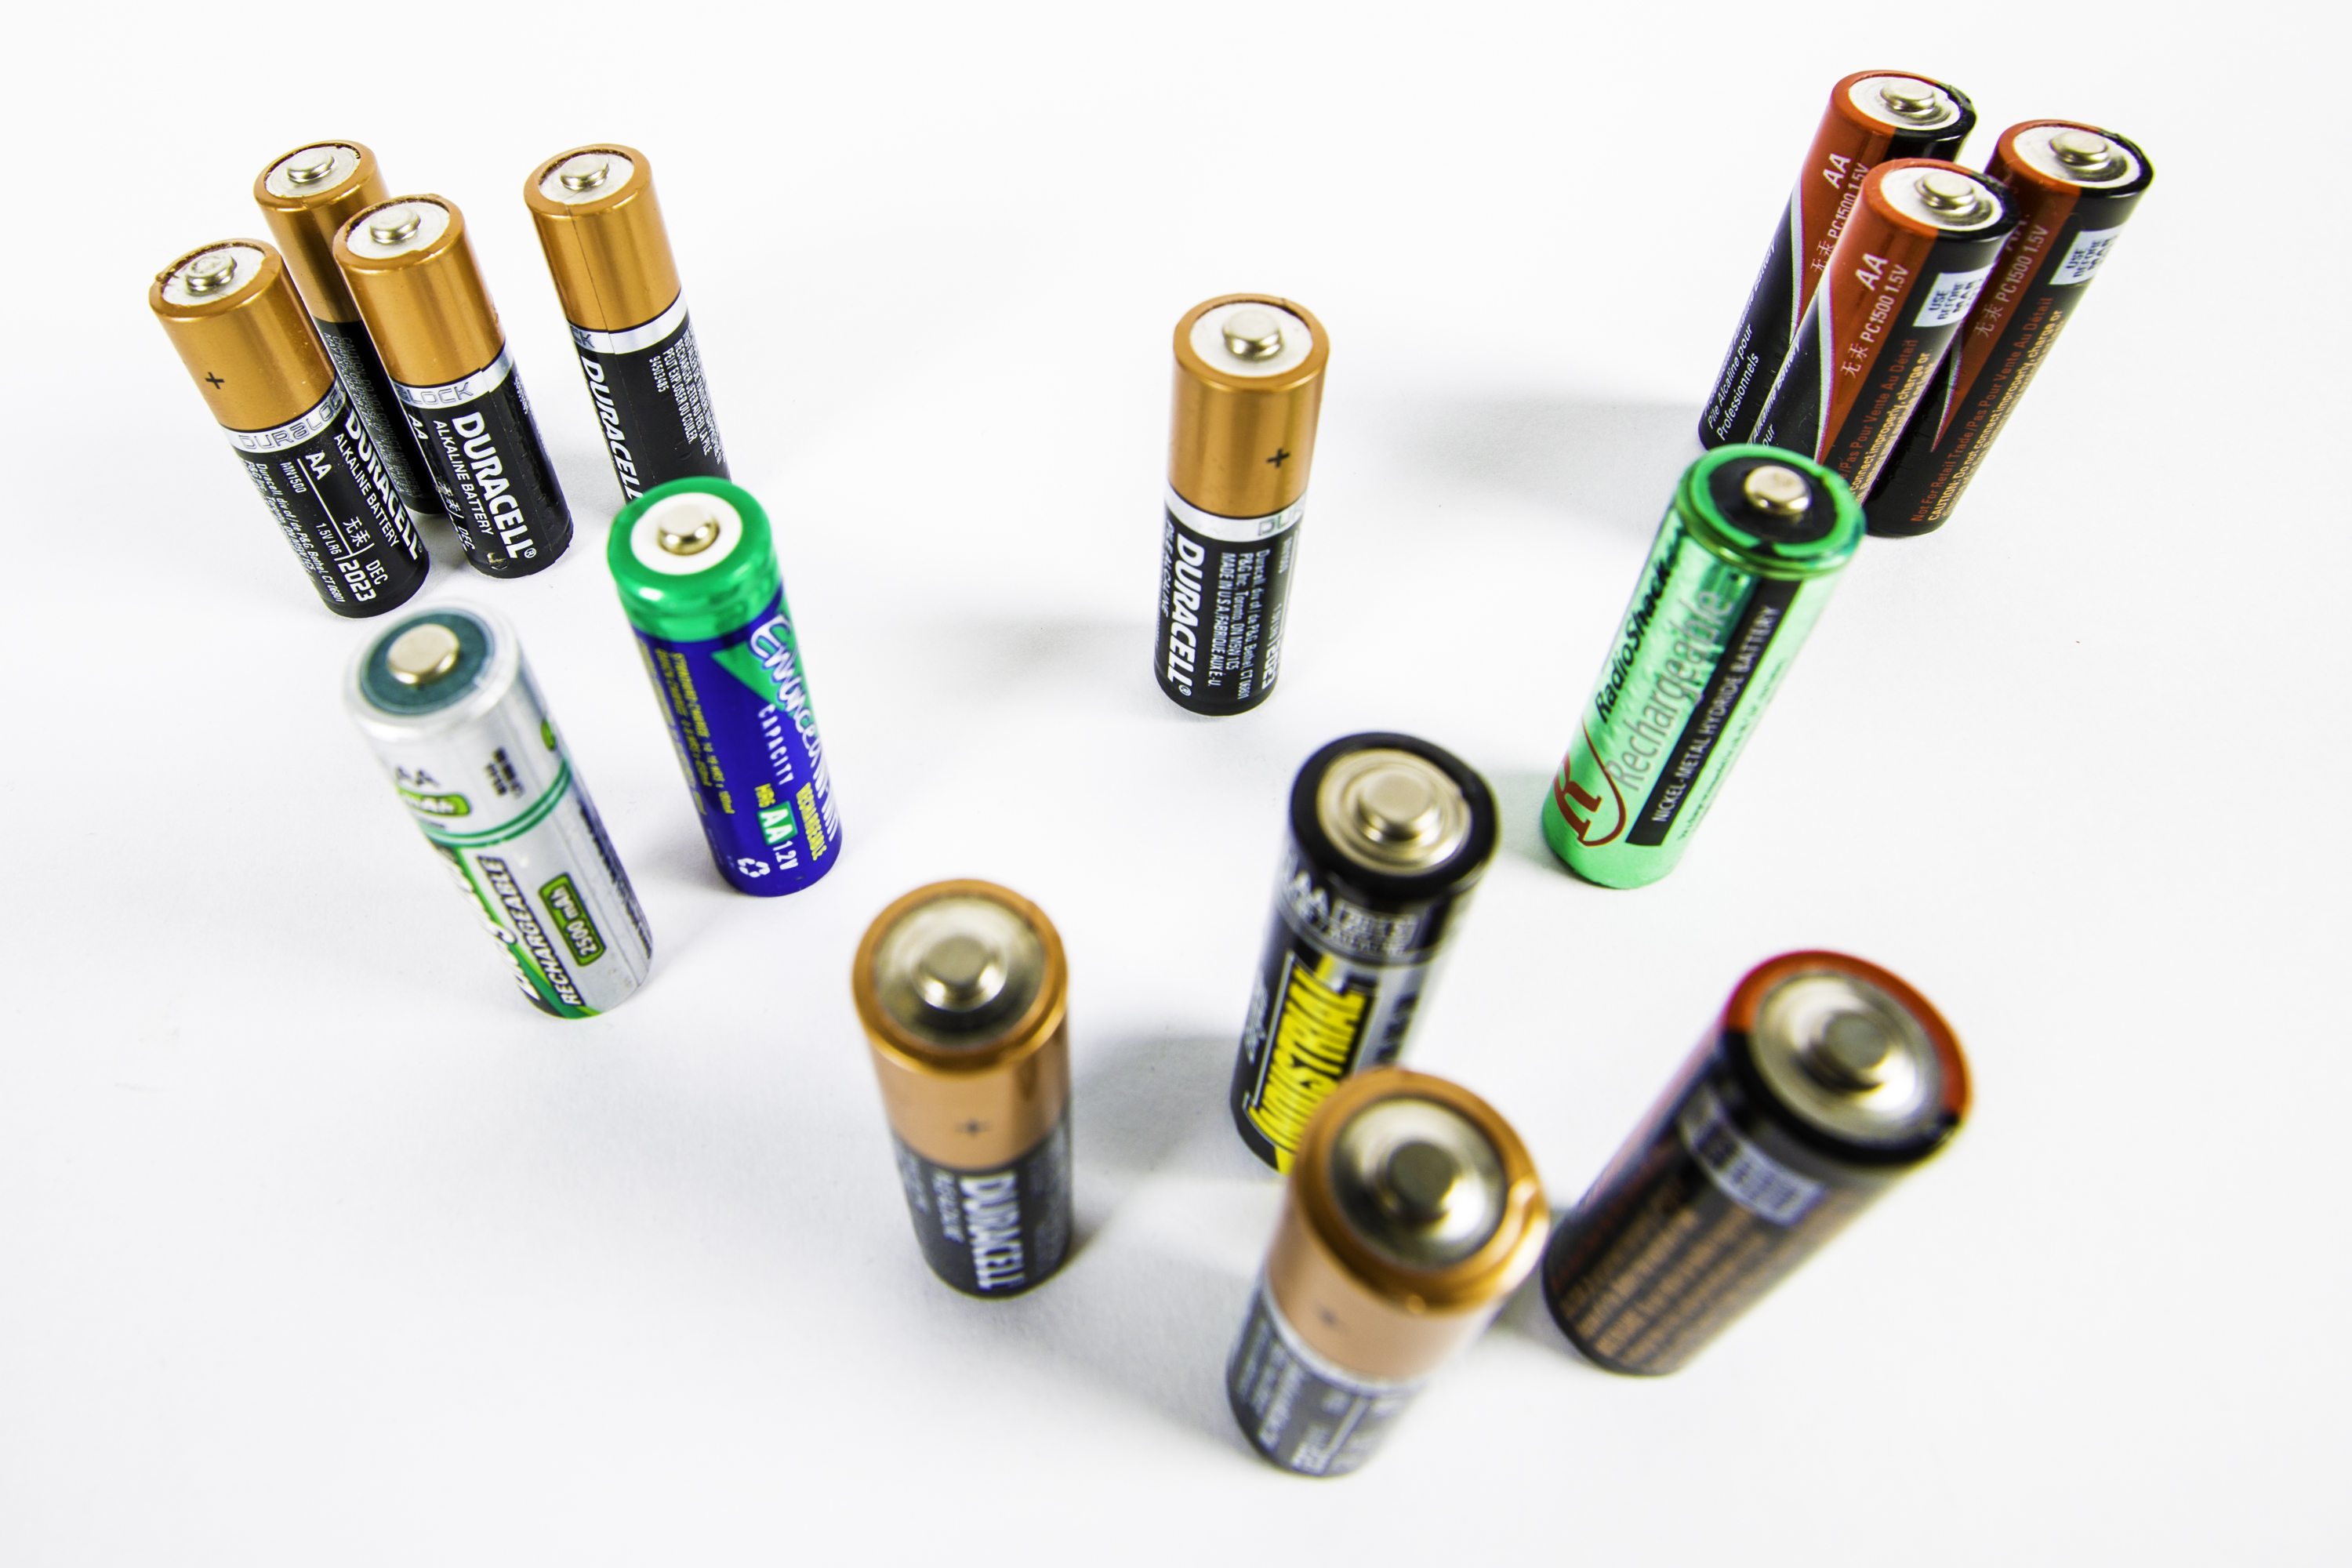 More batteries